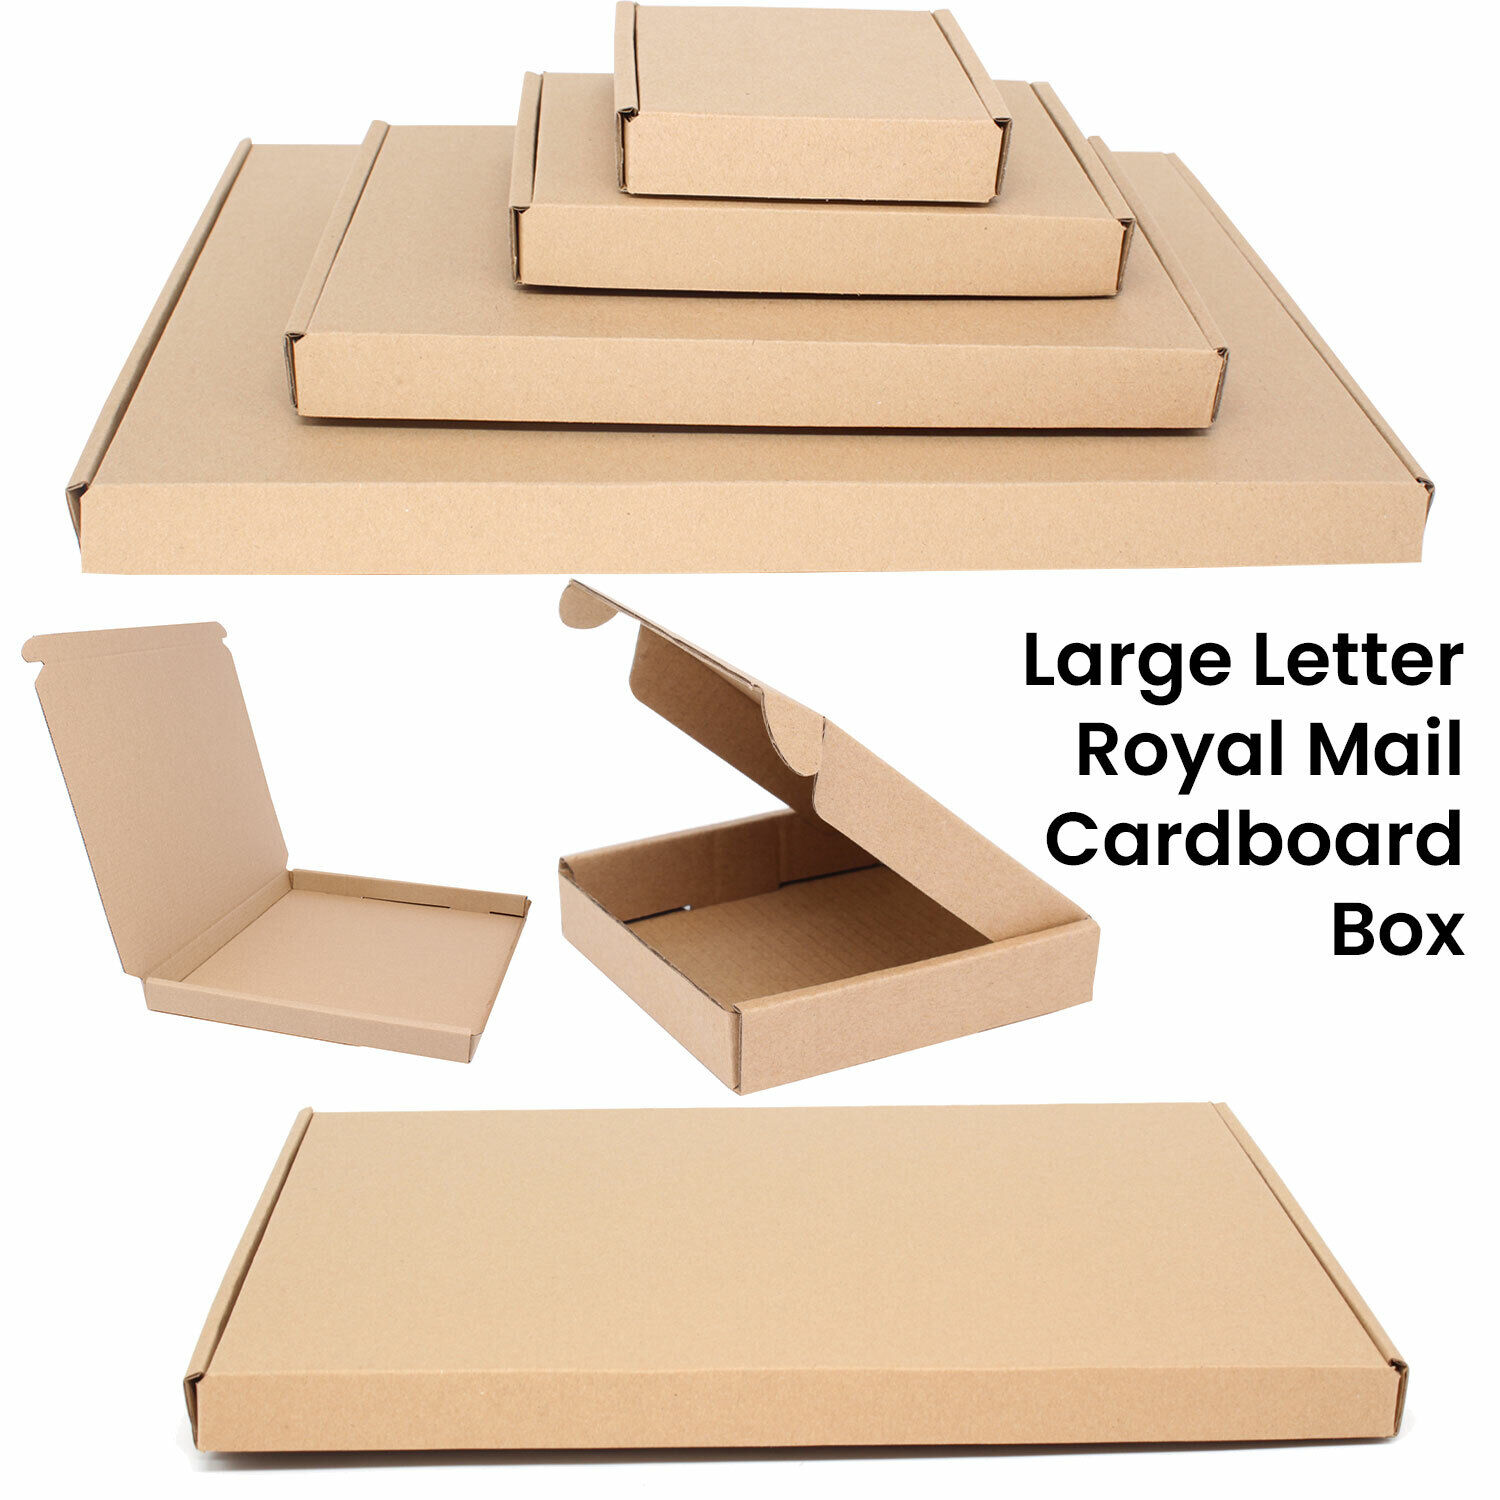 C4 C5 C6 C7 Postage Boxes PIP Large Letter Royal Mail Cardboard Postal Mailing Natychmiastowa dostawa towaru